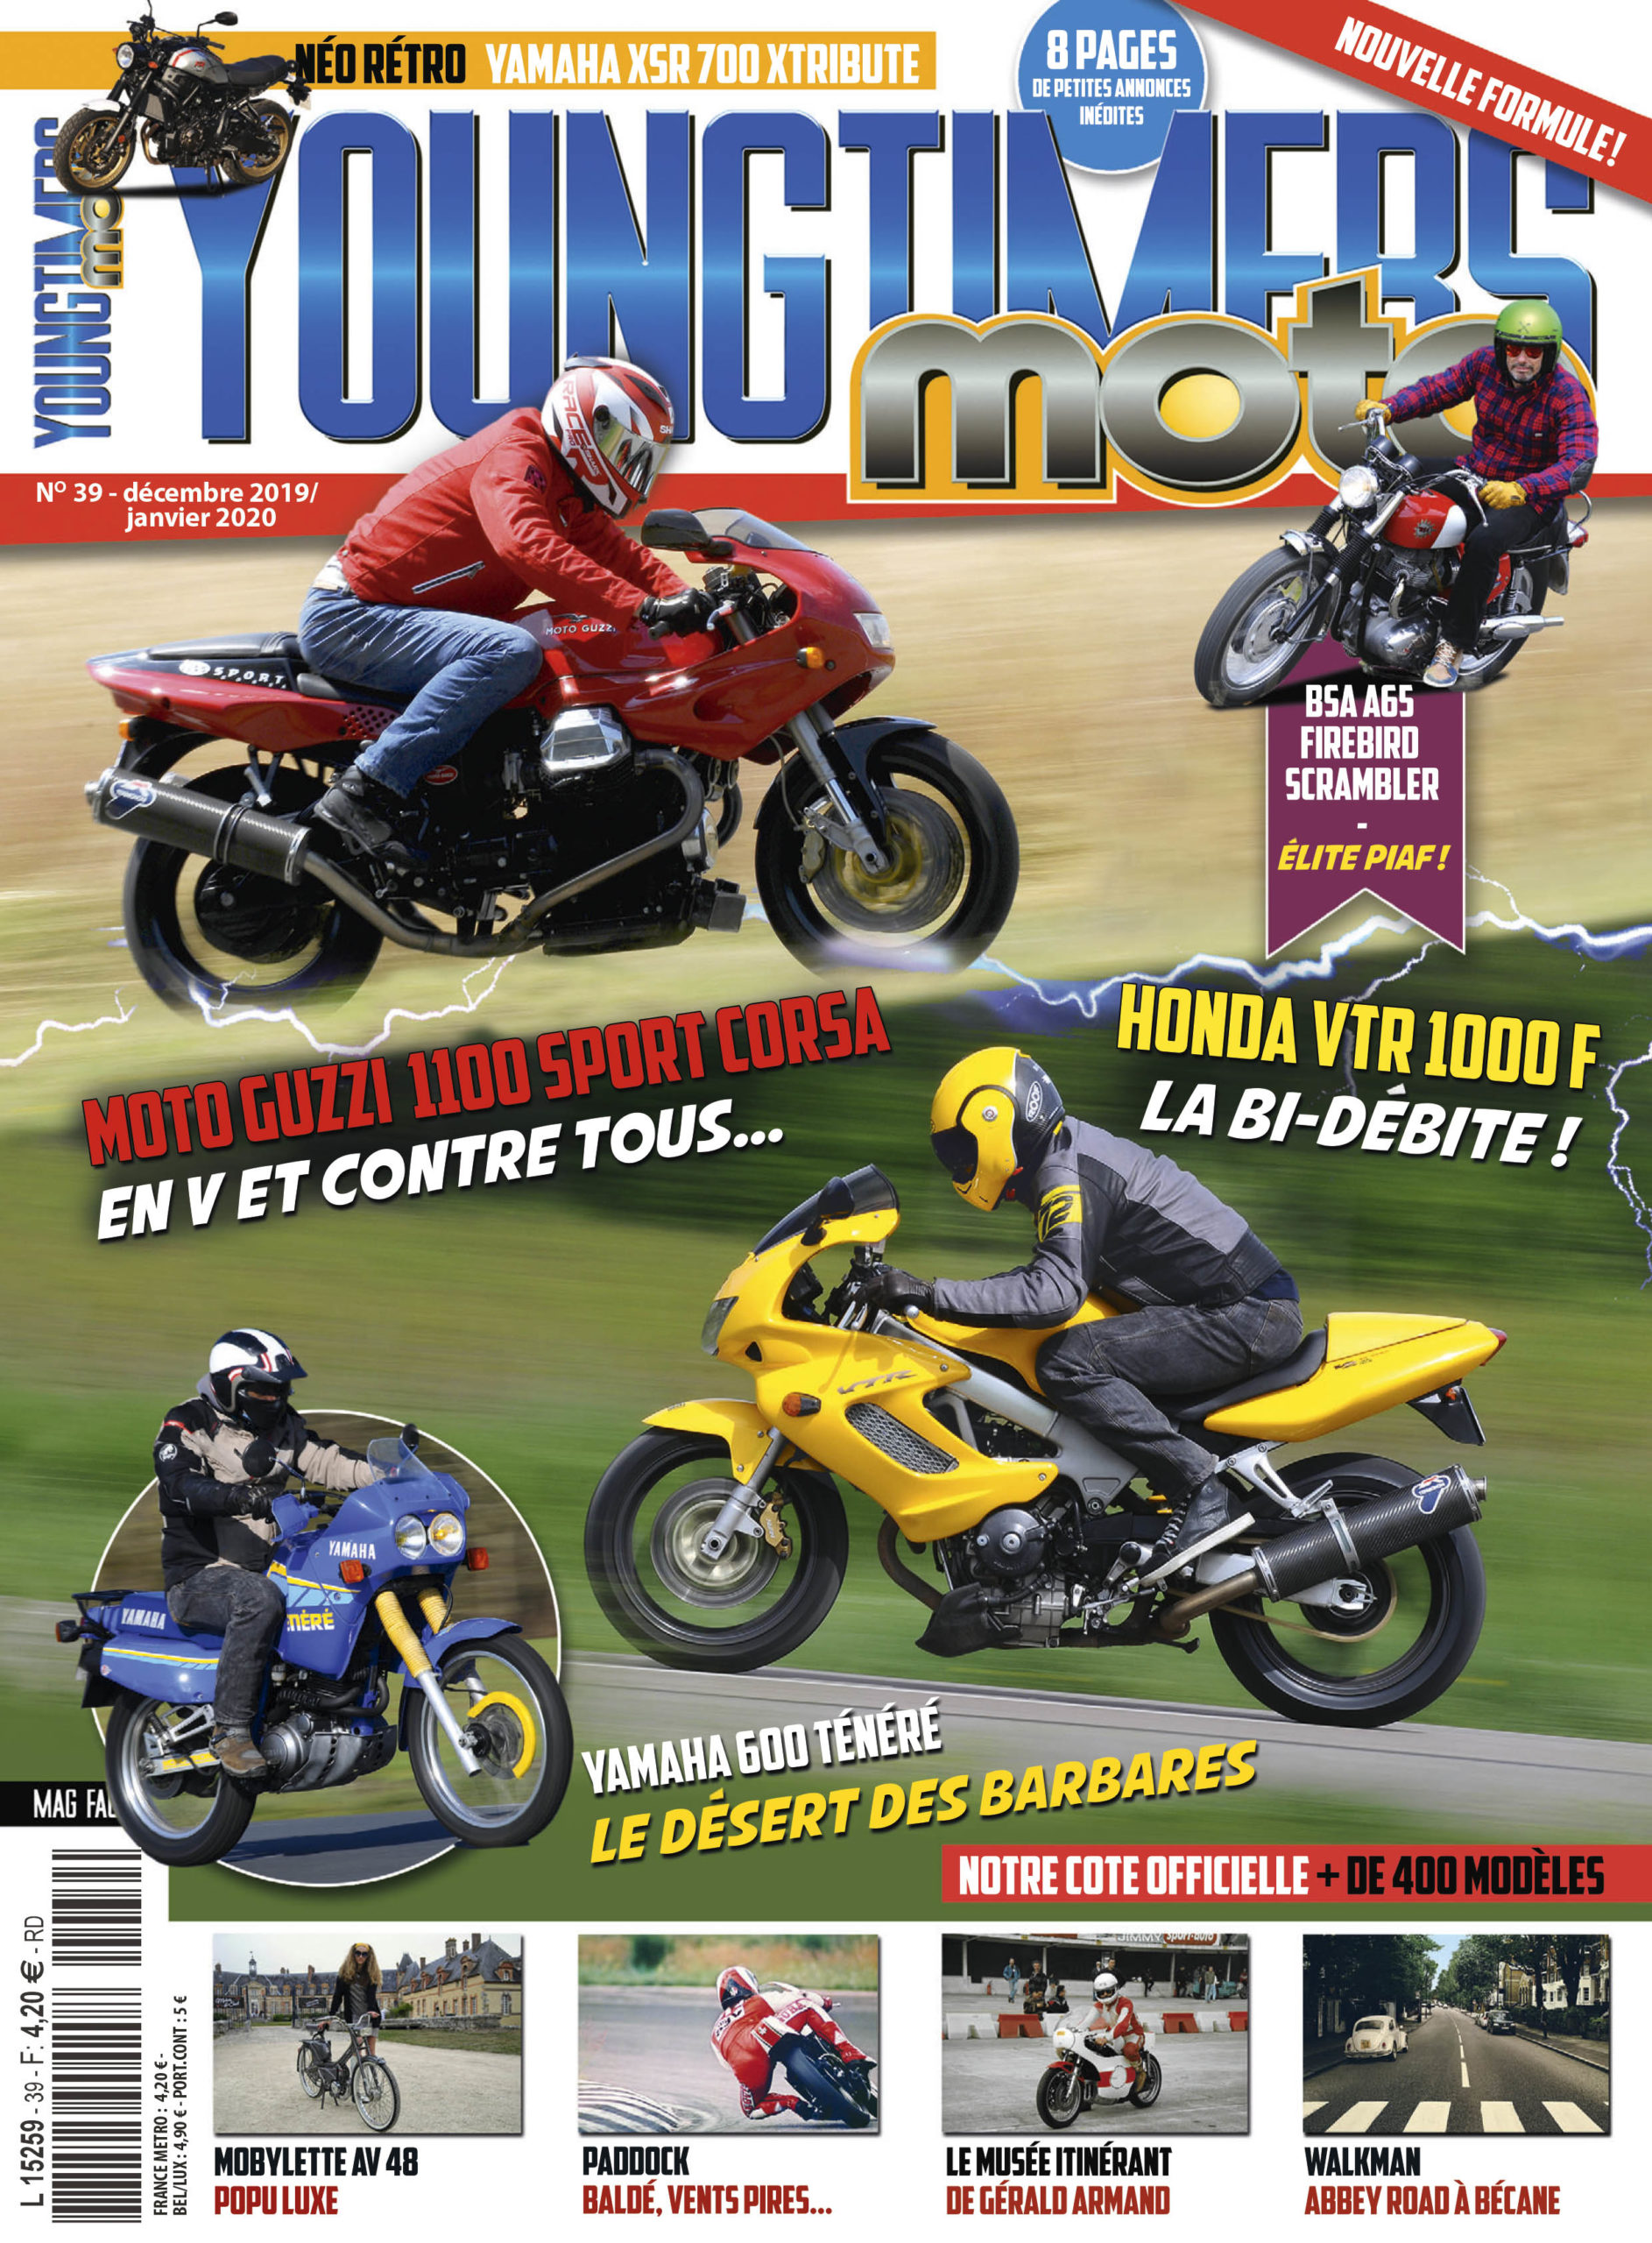 Moto Guzzi 1100 Sport, Yamaha 600 Ténéré, Mobylette AV 48, Honda VTR 1000 F, BSA A65 Firebird Scrambler, Yamaha XSR 700 Xtribute